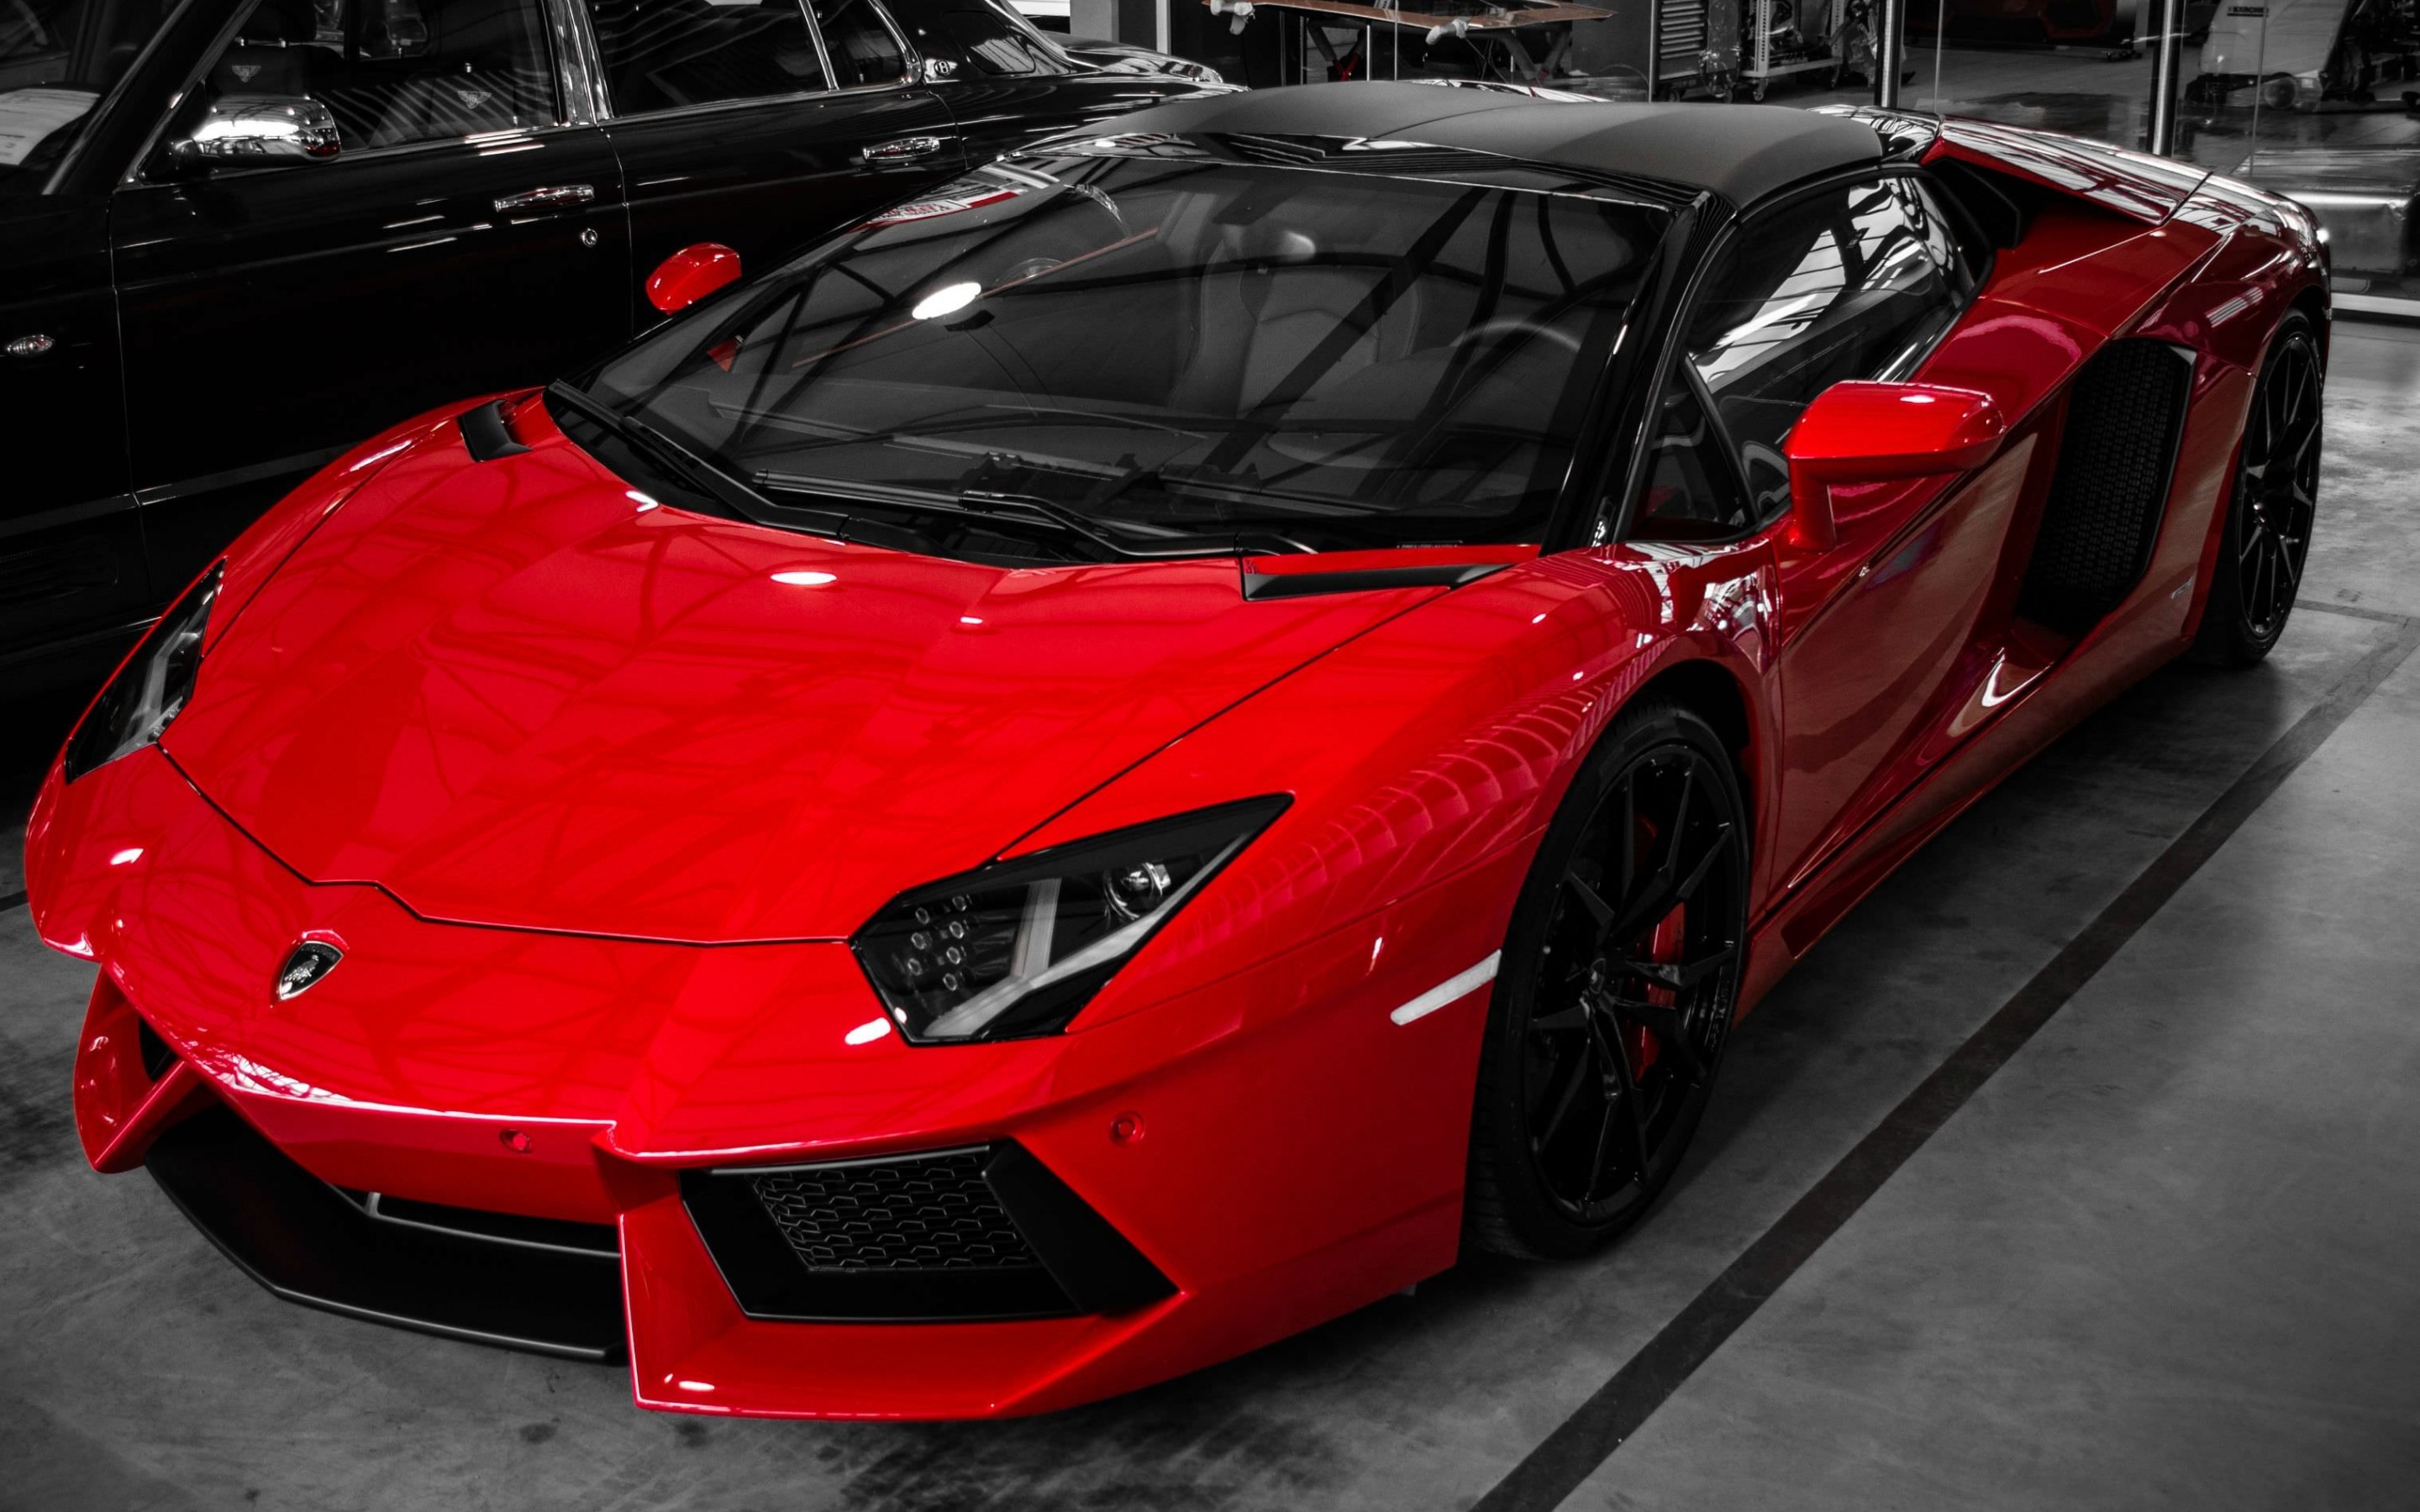 Red Lamborghini Aventador Wallpaper for Desktop 2880x1800